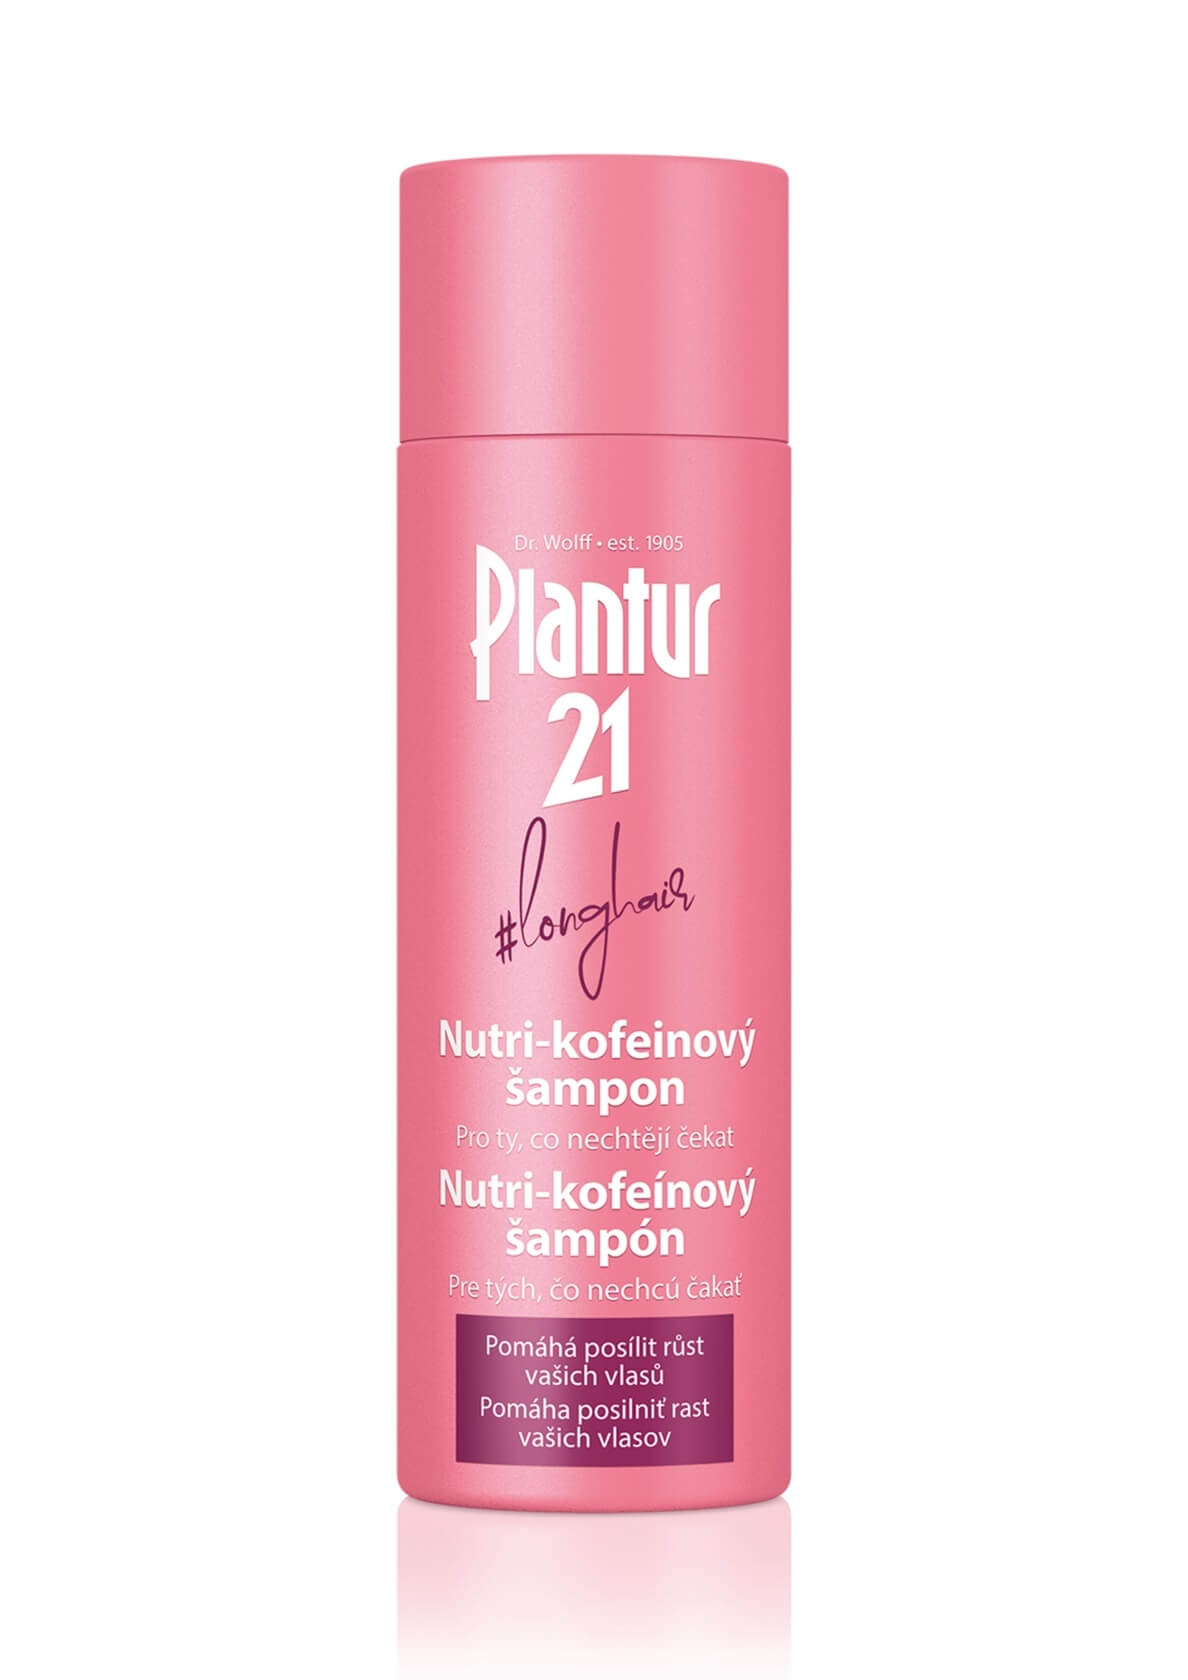 Plantur Nutri-kofeinový šampon Longhair pro podporu růstu vlasů 200 ml